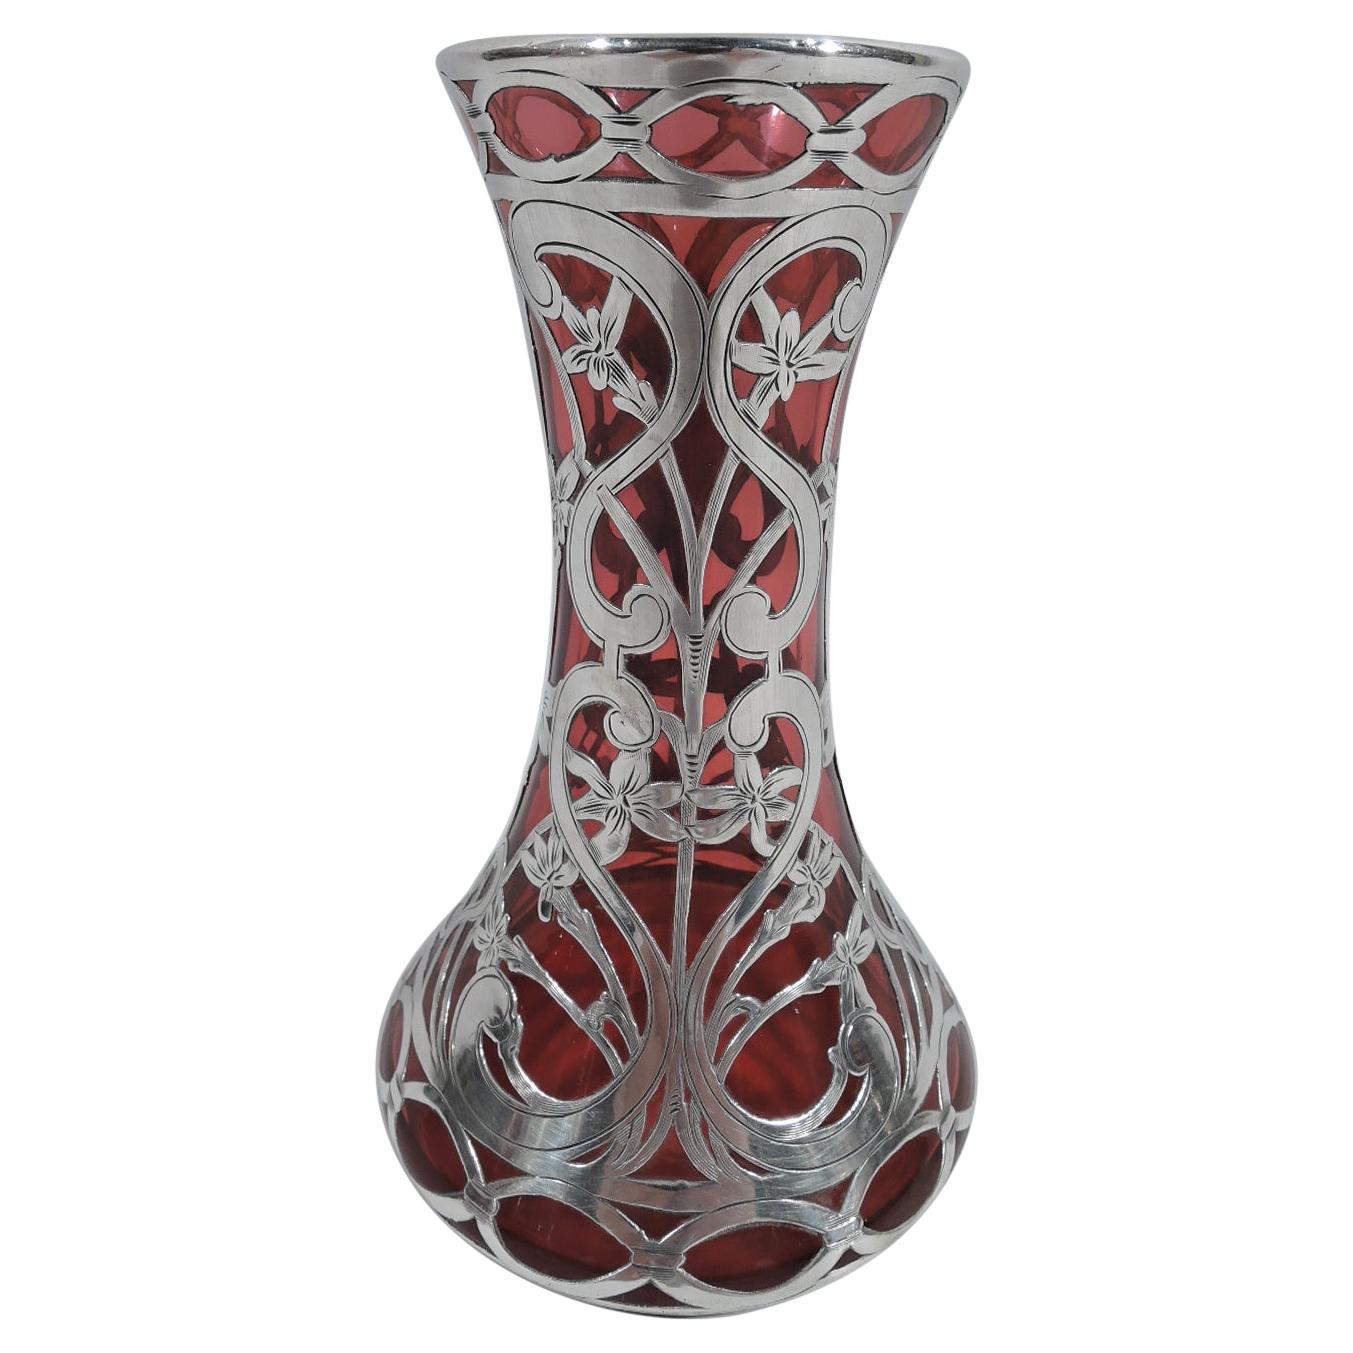 Antique Alvin Art Nouveau Red Silver Overlay Vase